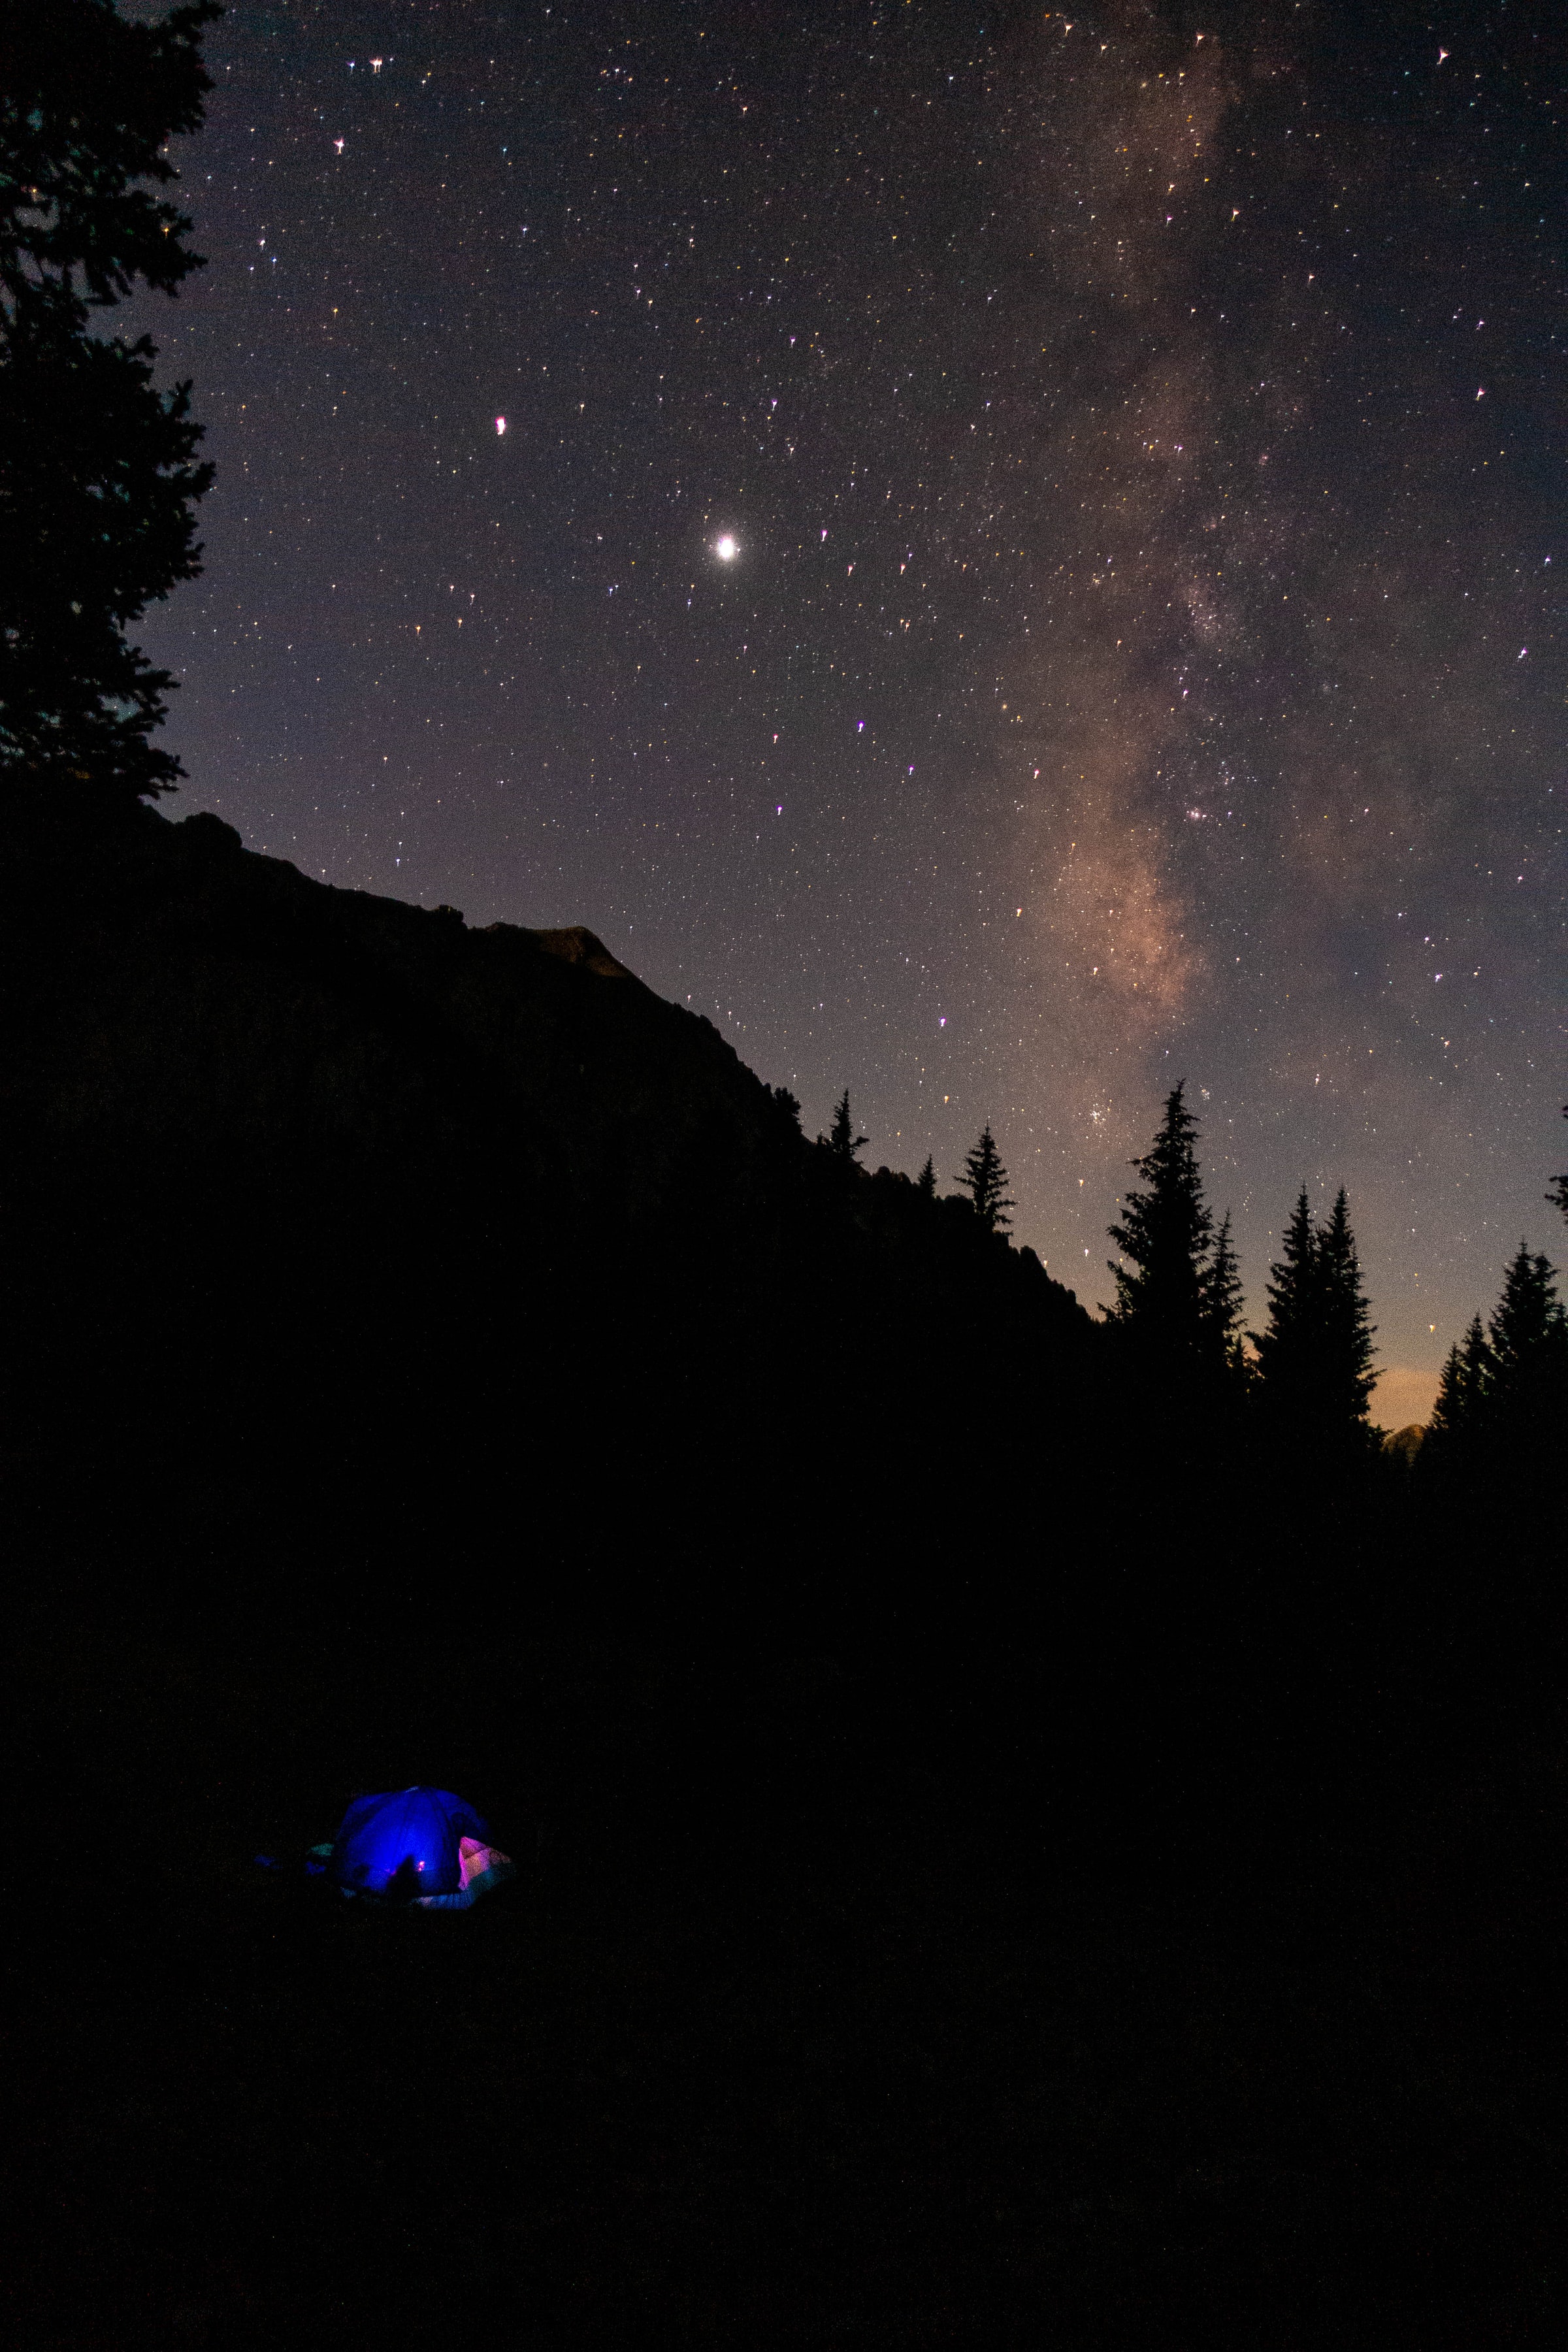 camping, nature, mountains, stars, night, dark, tent, campsite